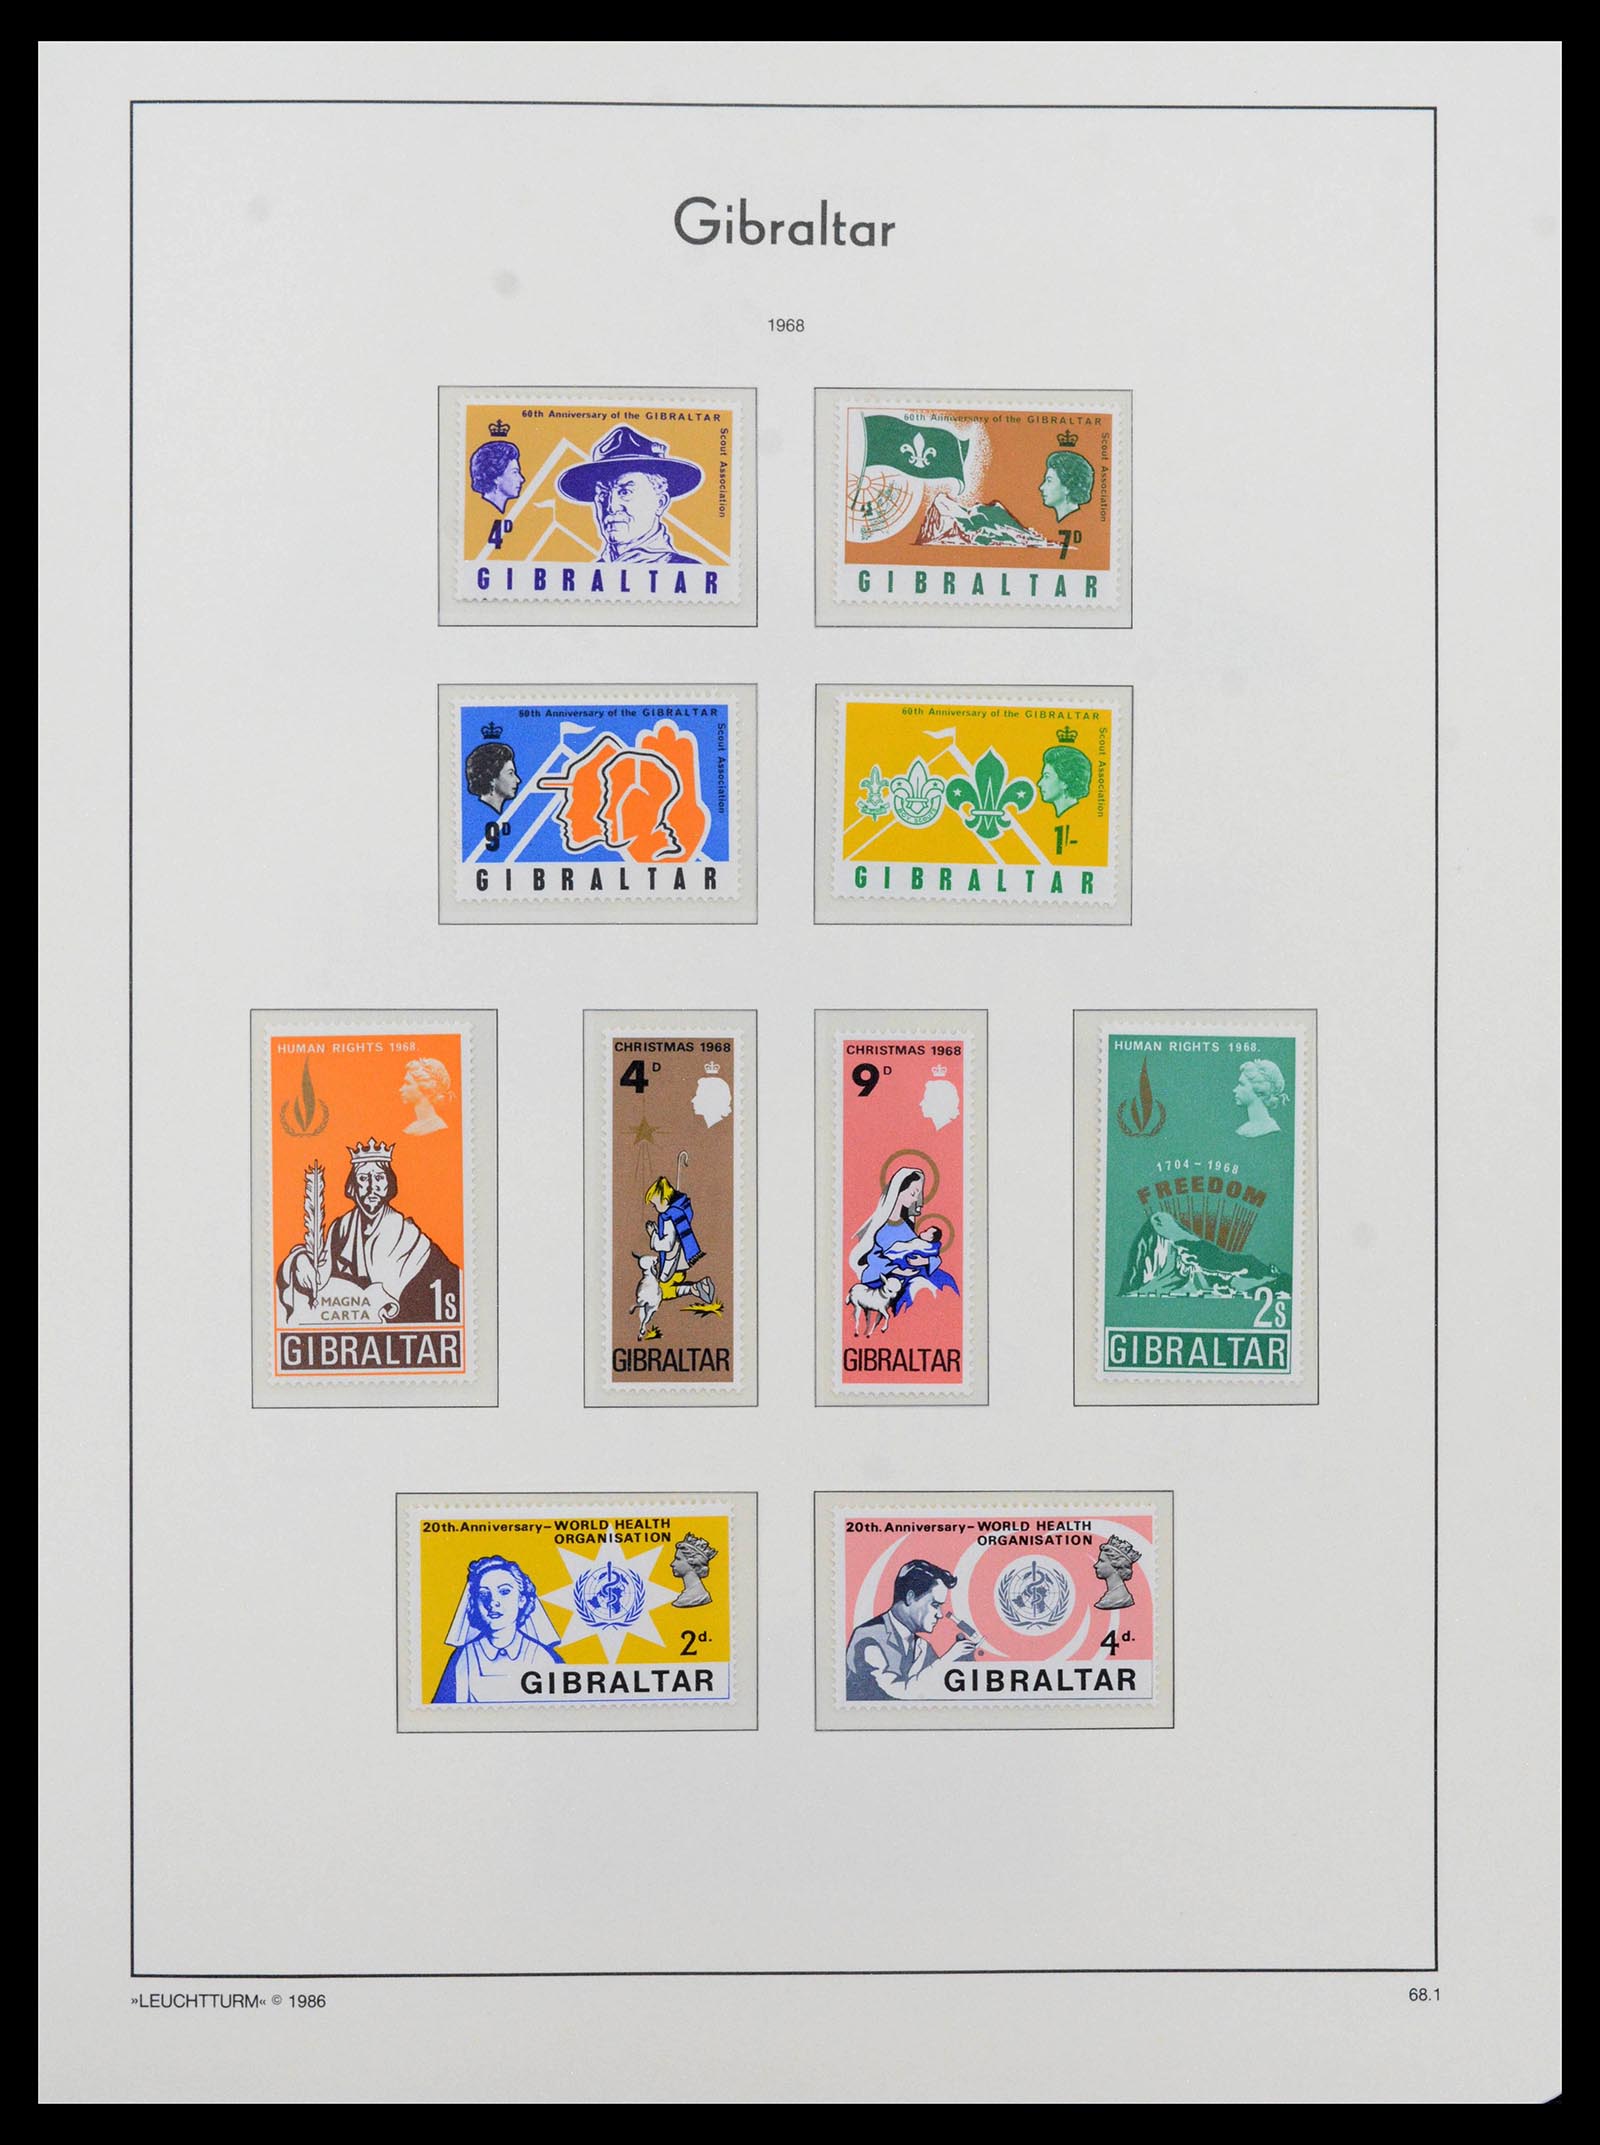 39158 0020 - Stamp collection 39158 Gibraltar 1886-2013.